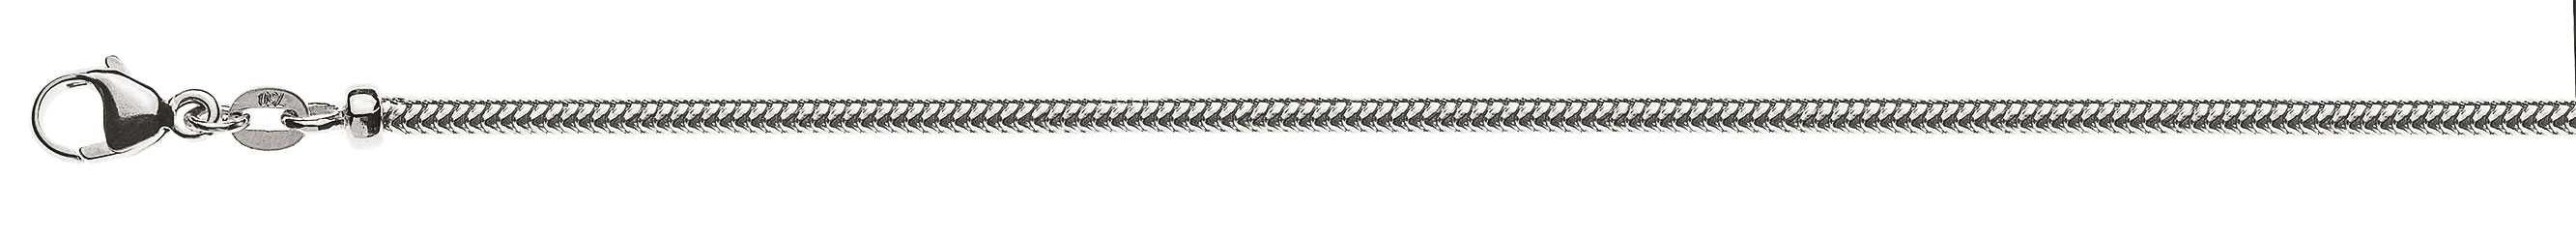 AURONOS Prestige Necklace white gold 18K snake chain 45cm 2.4mm